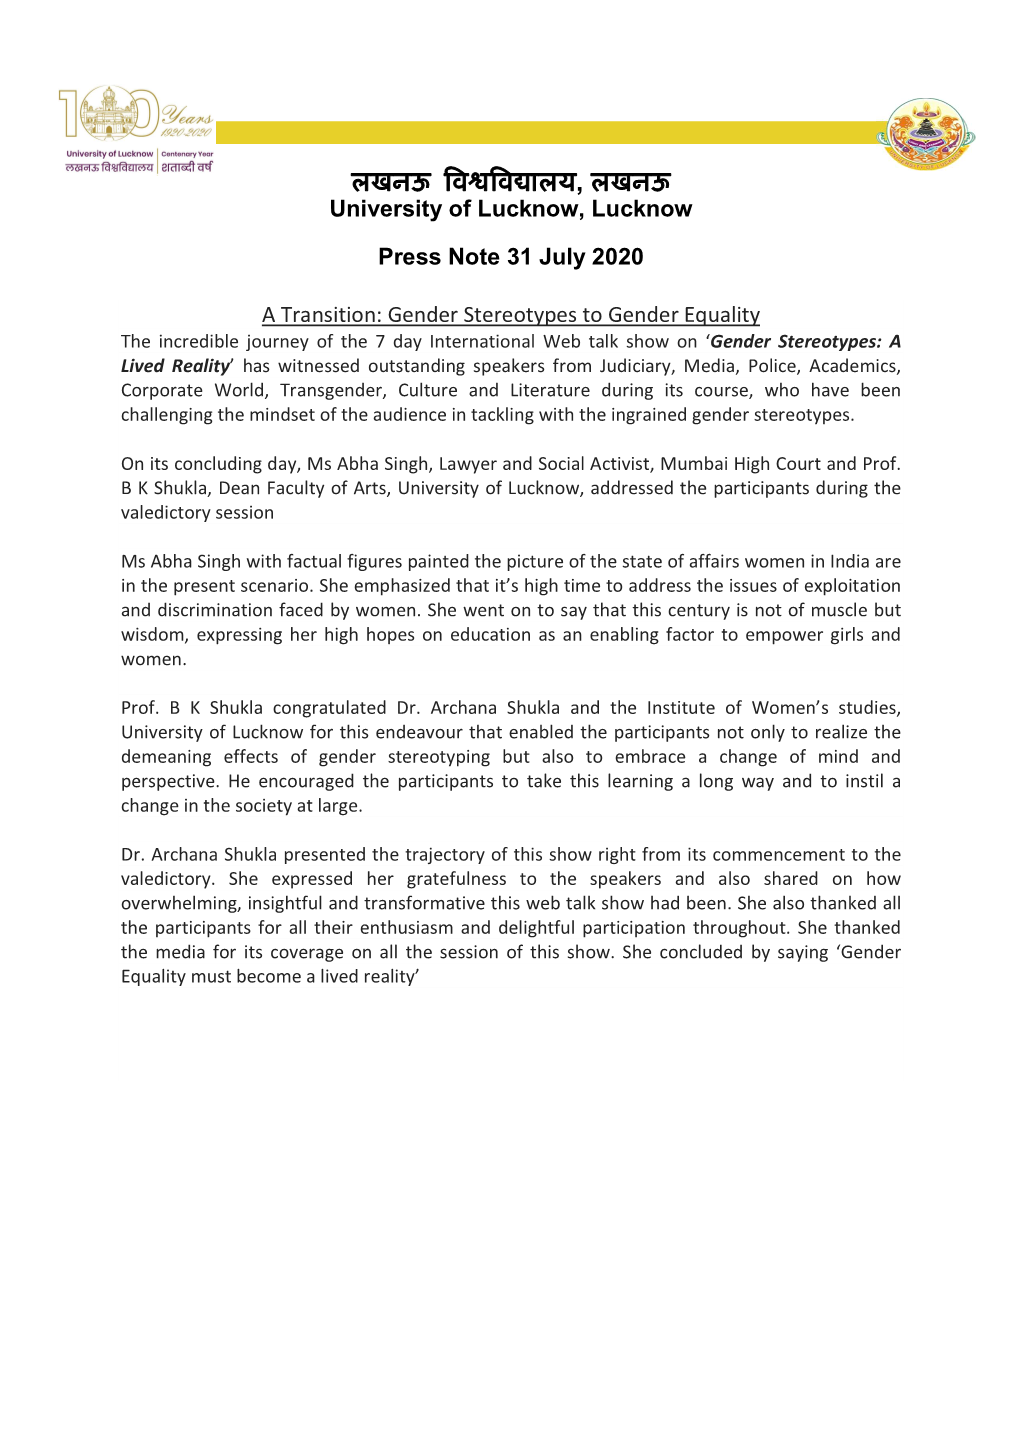 Press Release of 31 July 2020